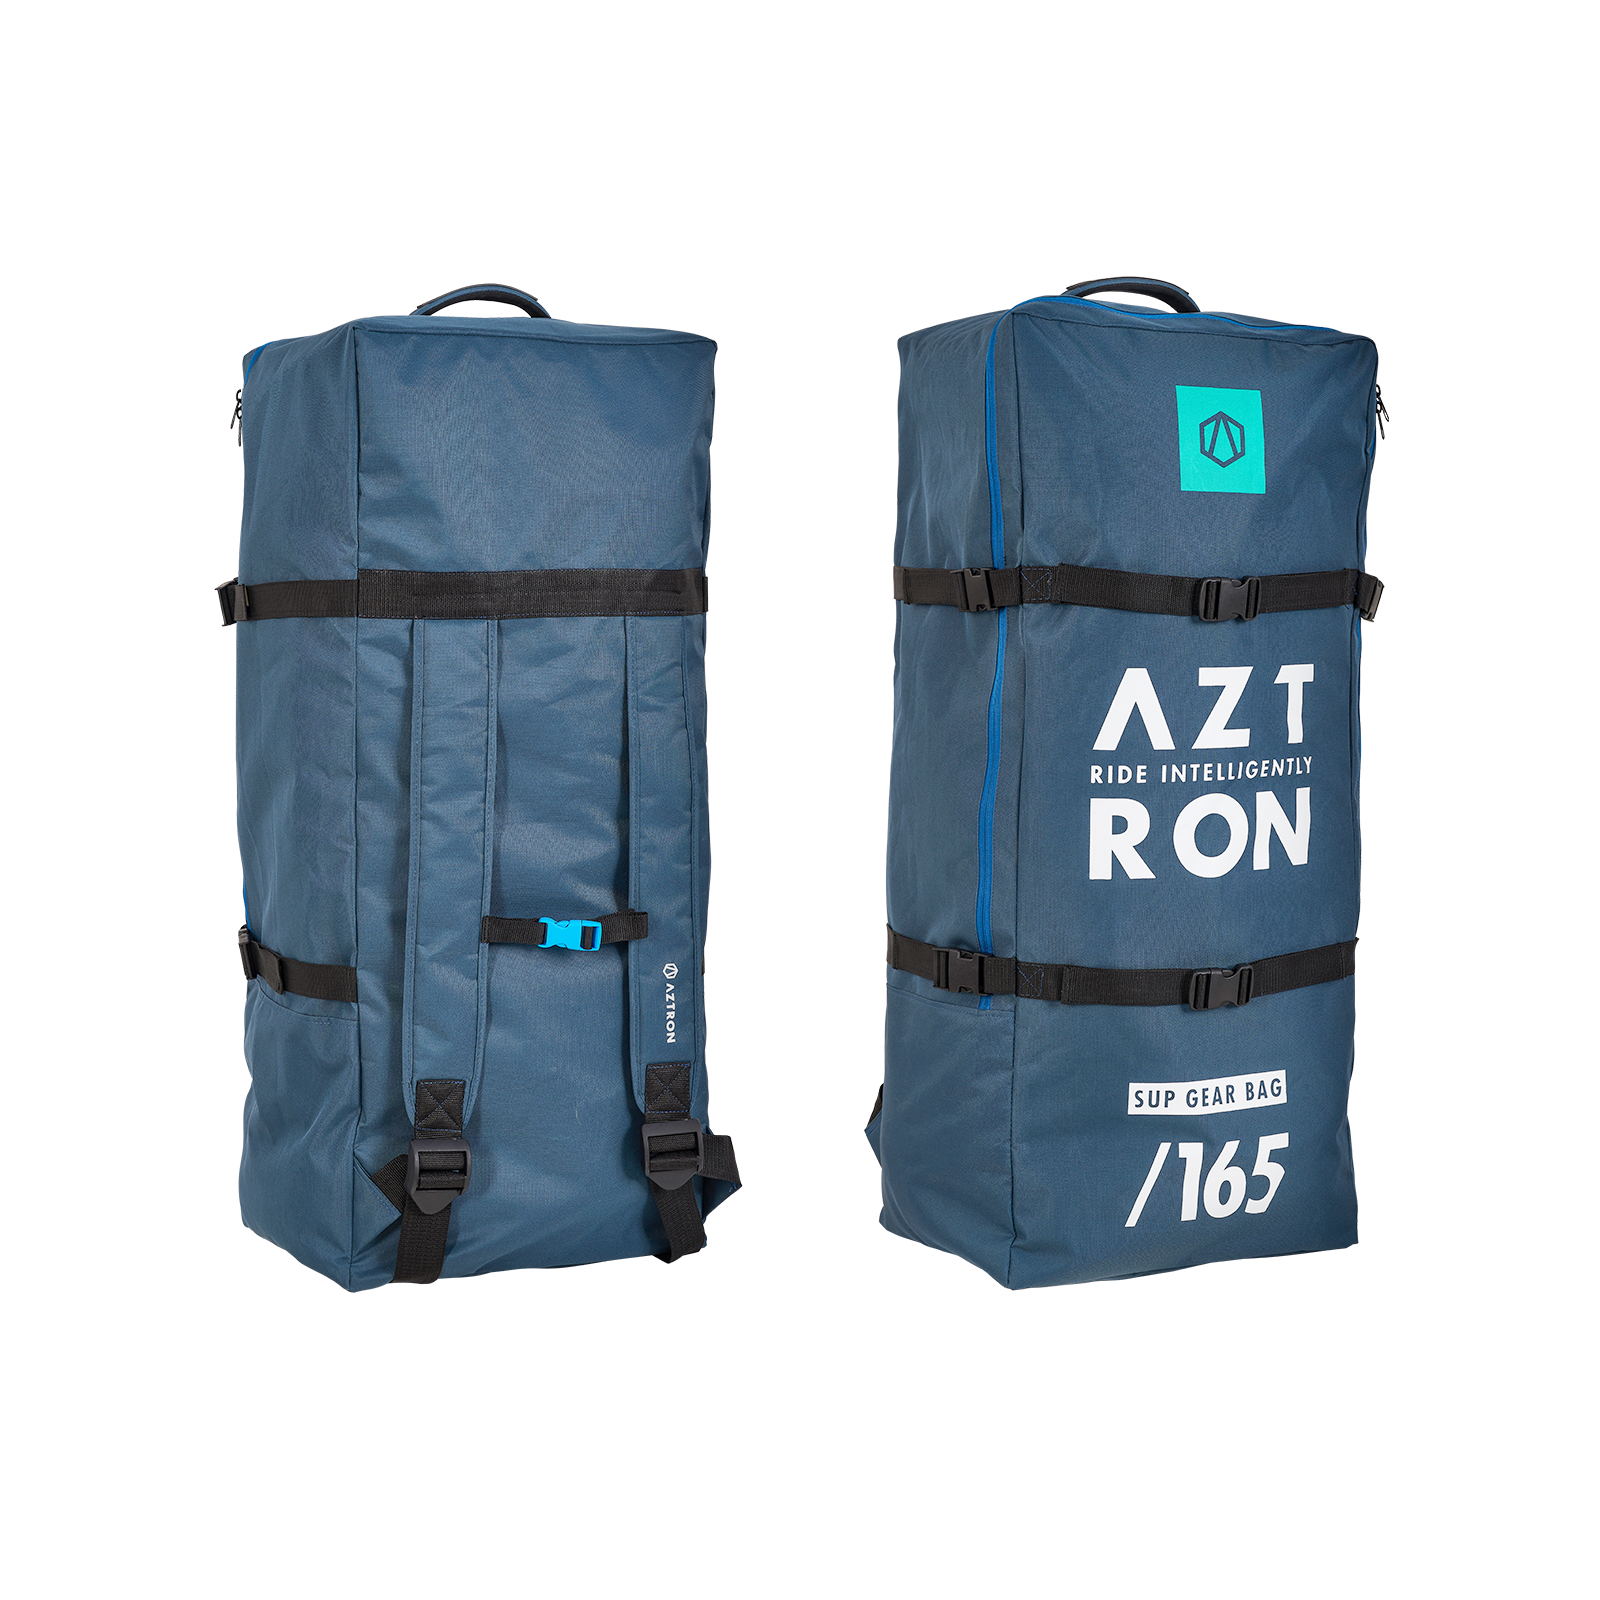 Aztron 165L SUP Bag